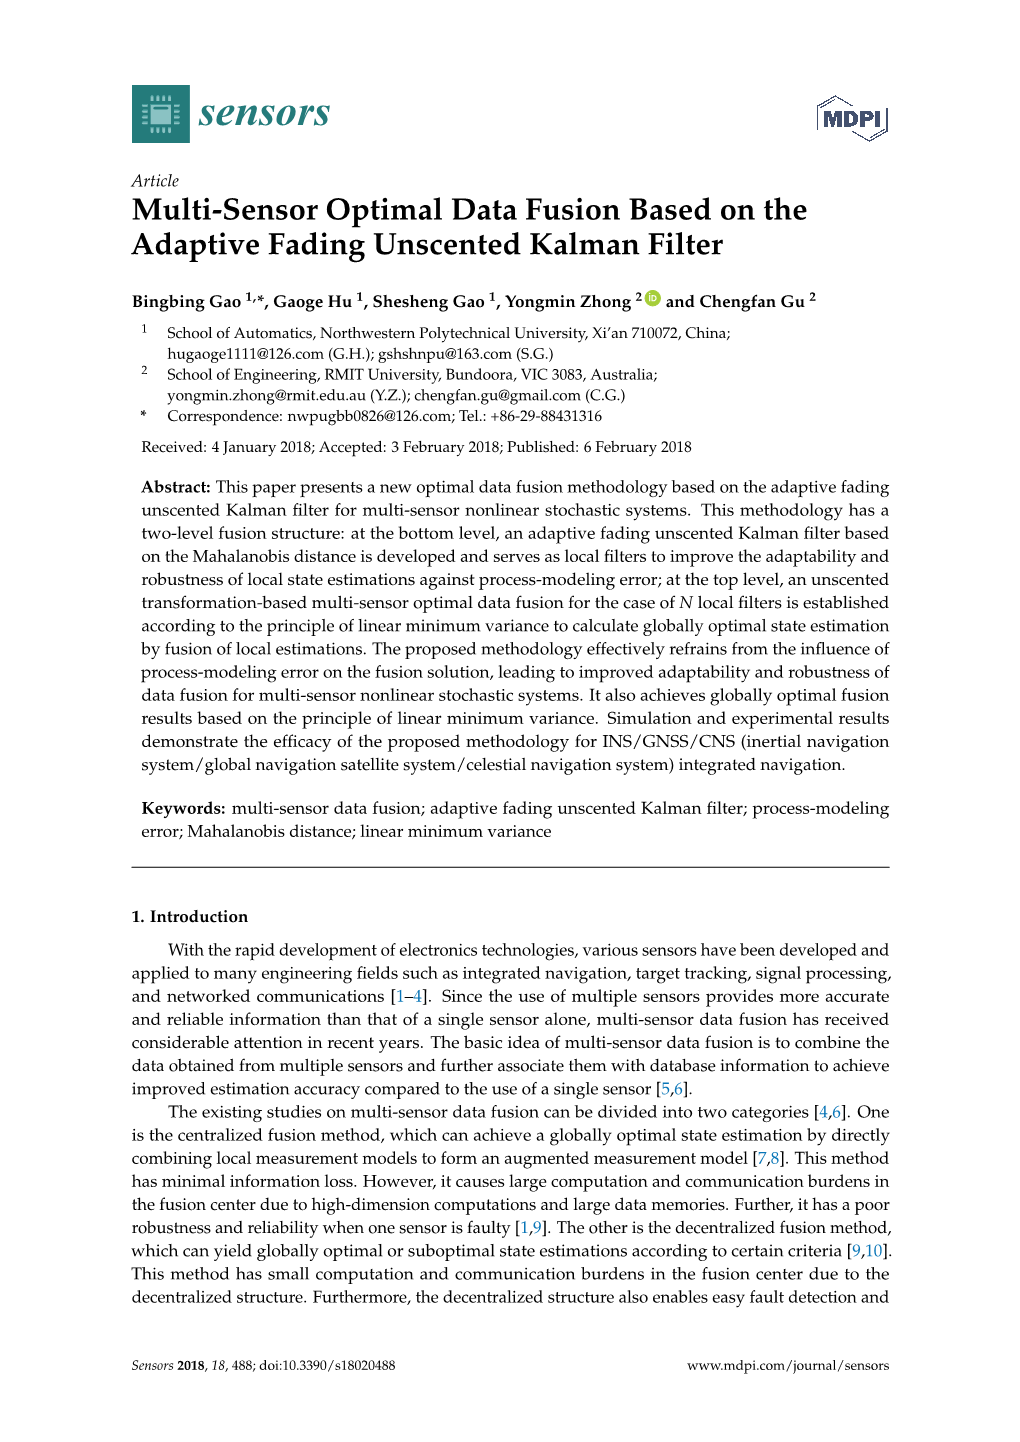 Multi-Sensor Optimal Data Fusion Based on the Adaptive Fading Unscented Kalman Filter